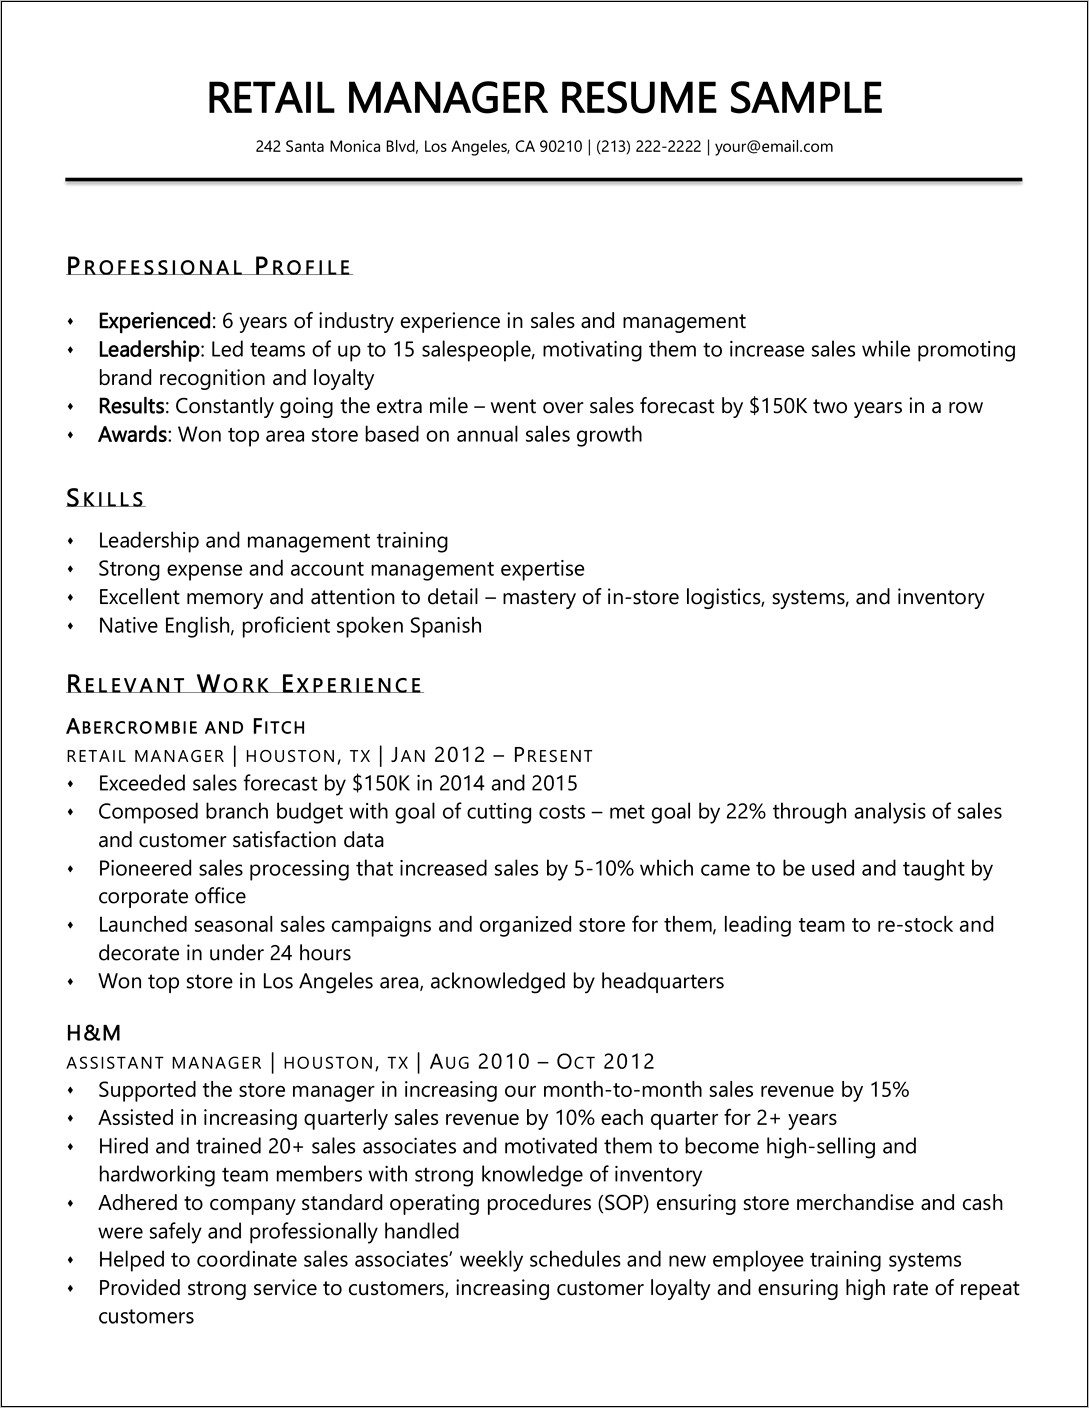 Professional Summary Sample Retail Resume